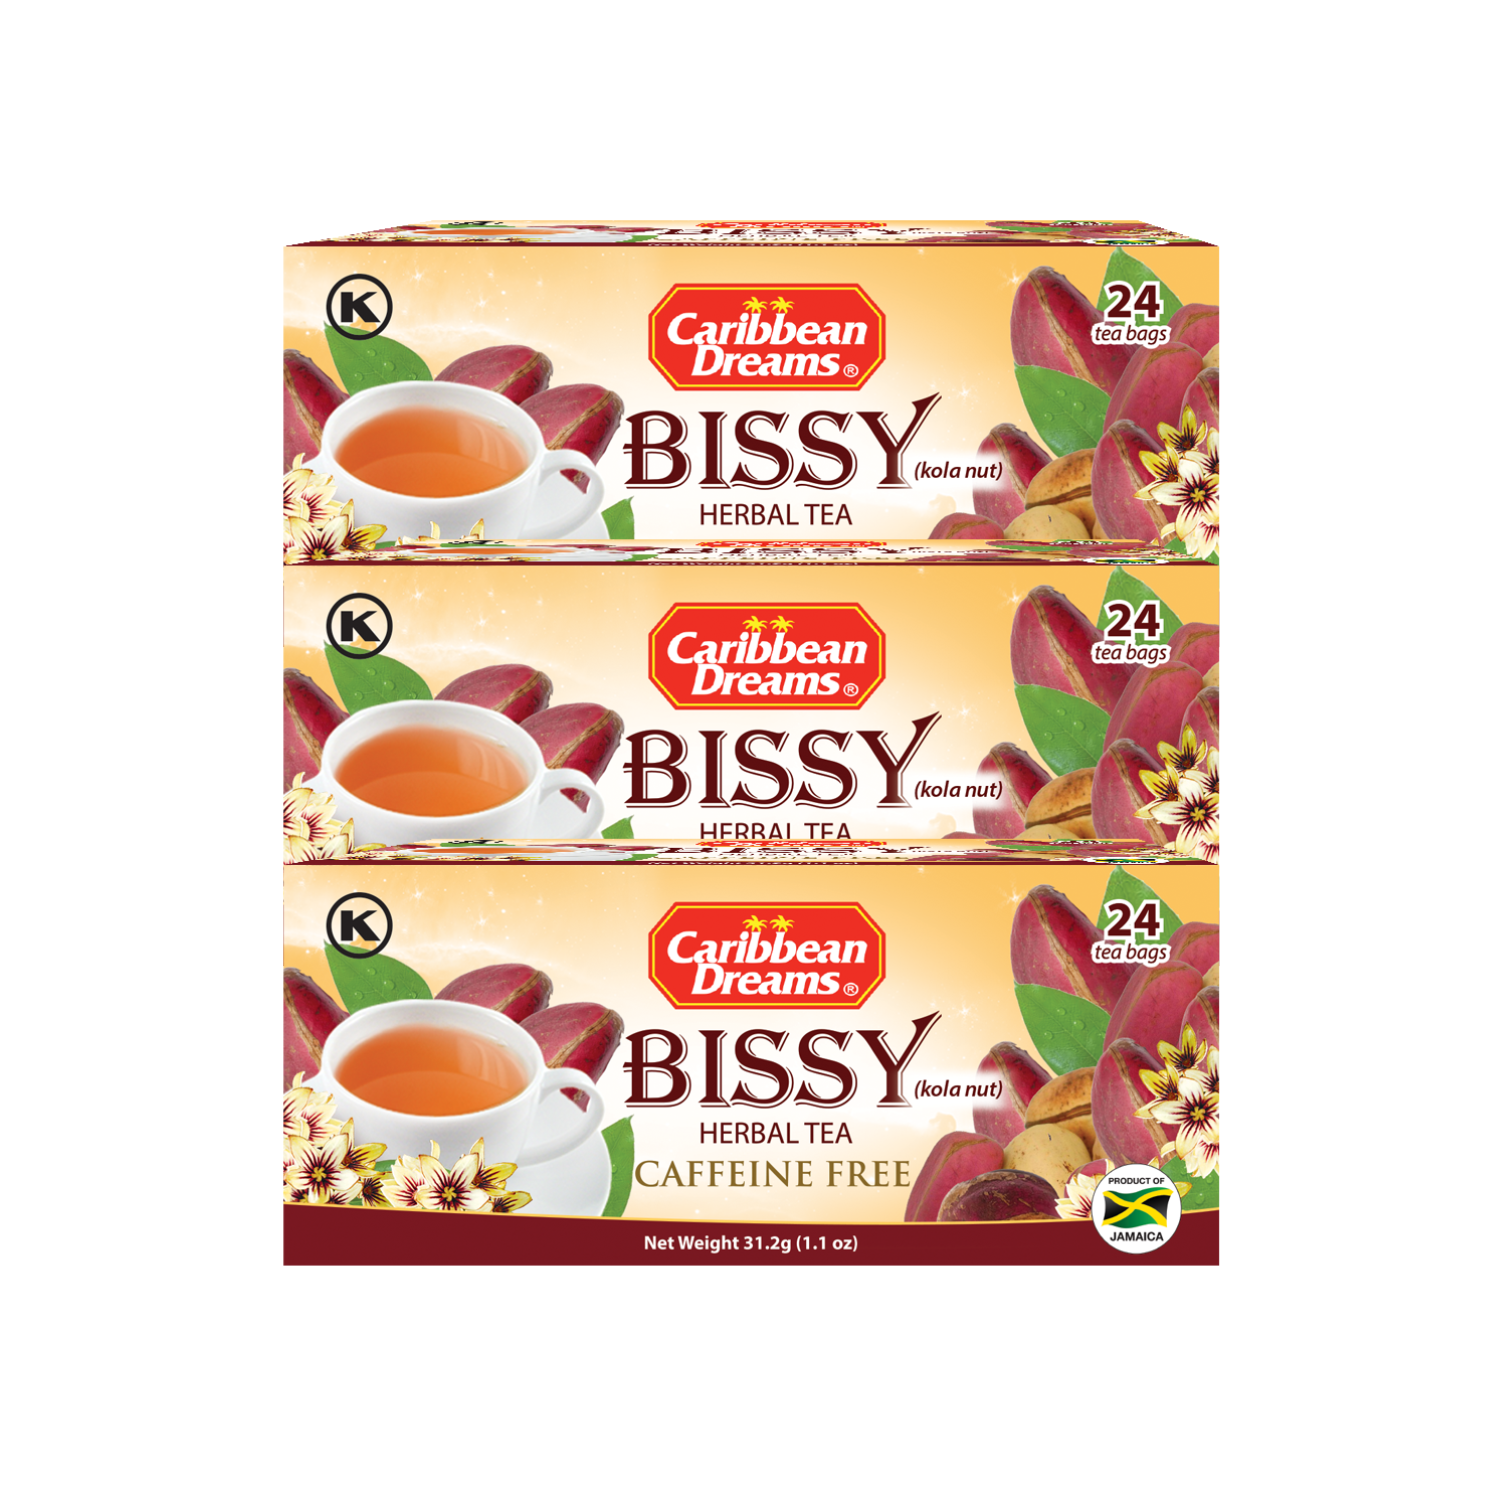 bissy tea